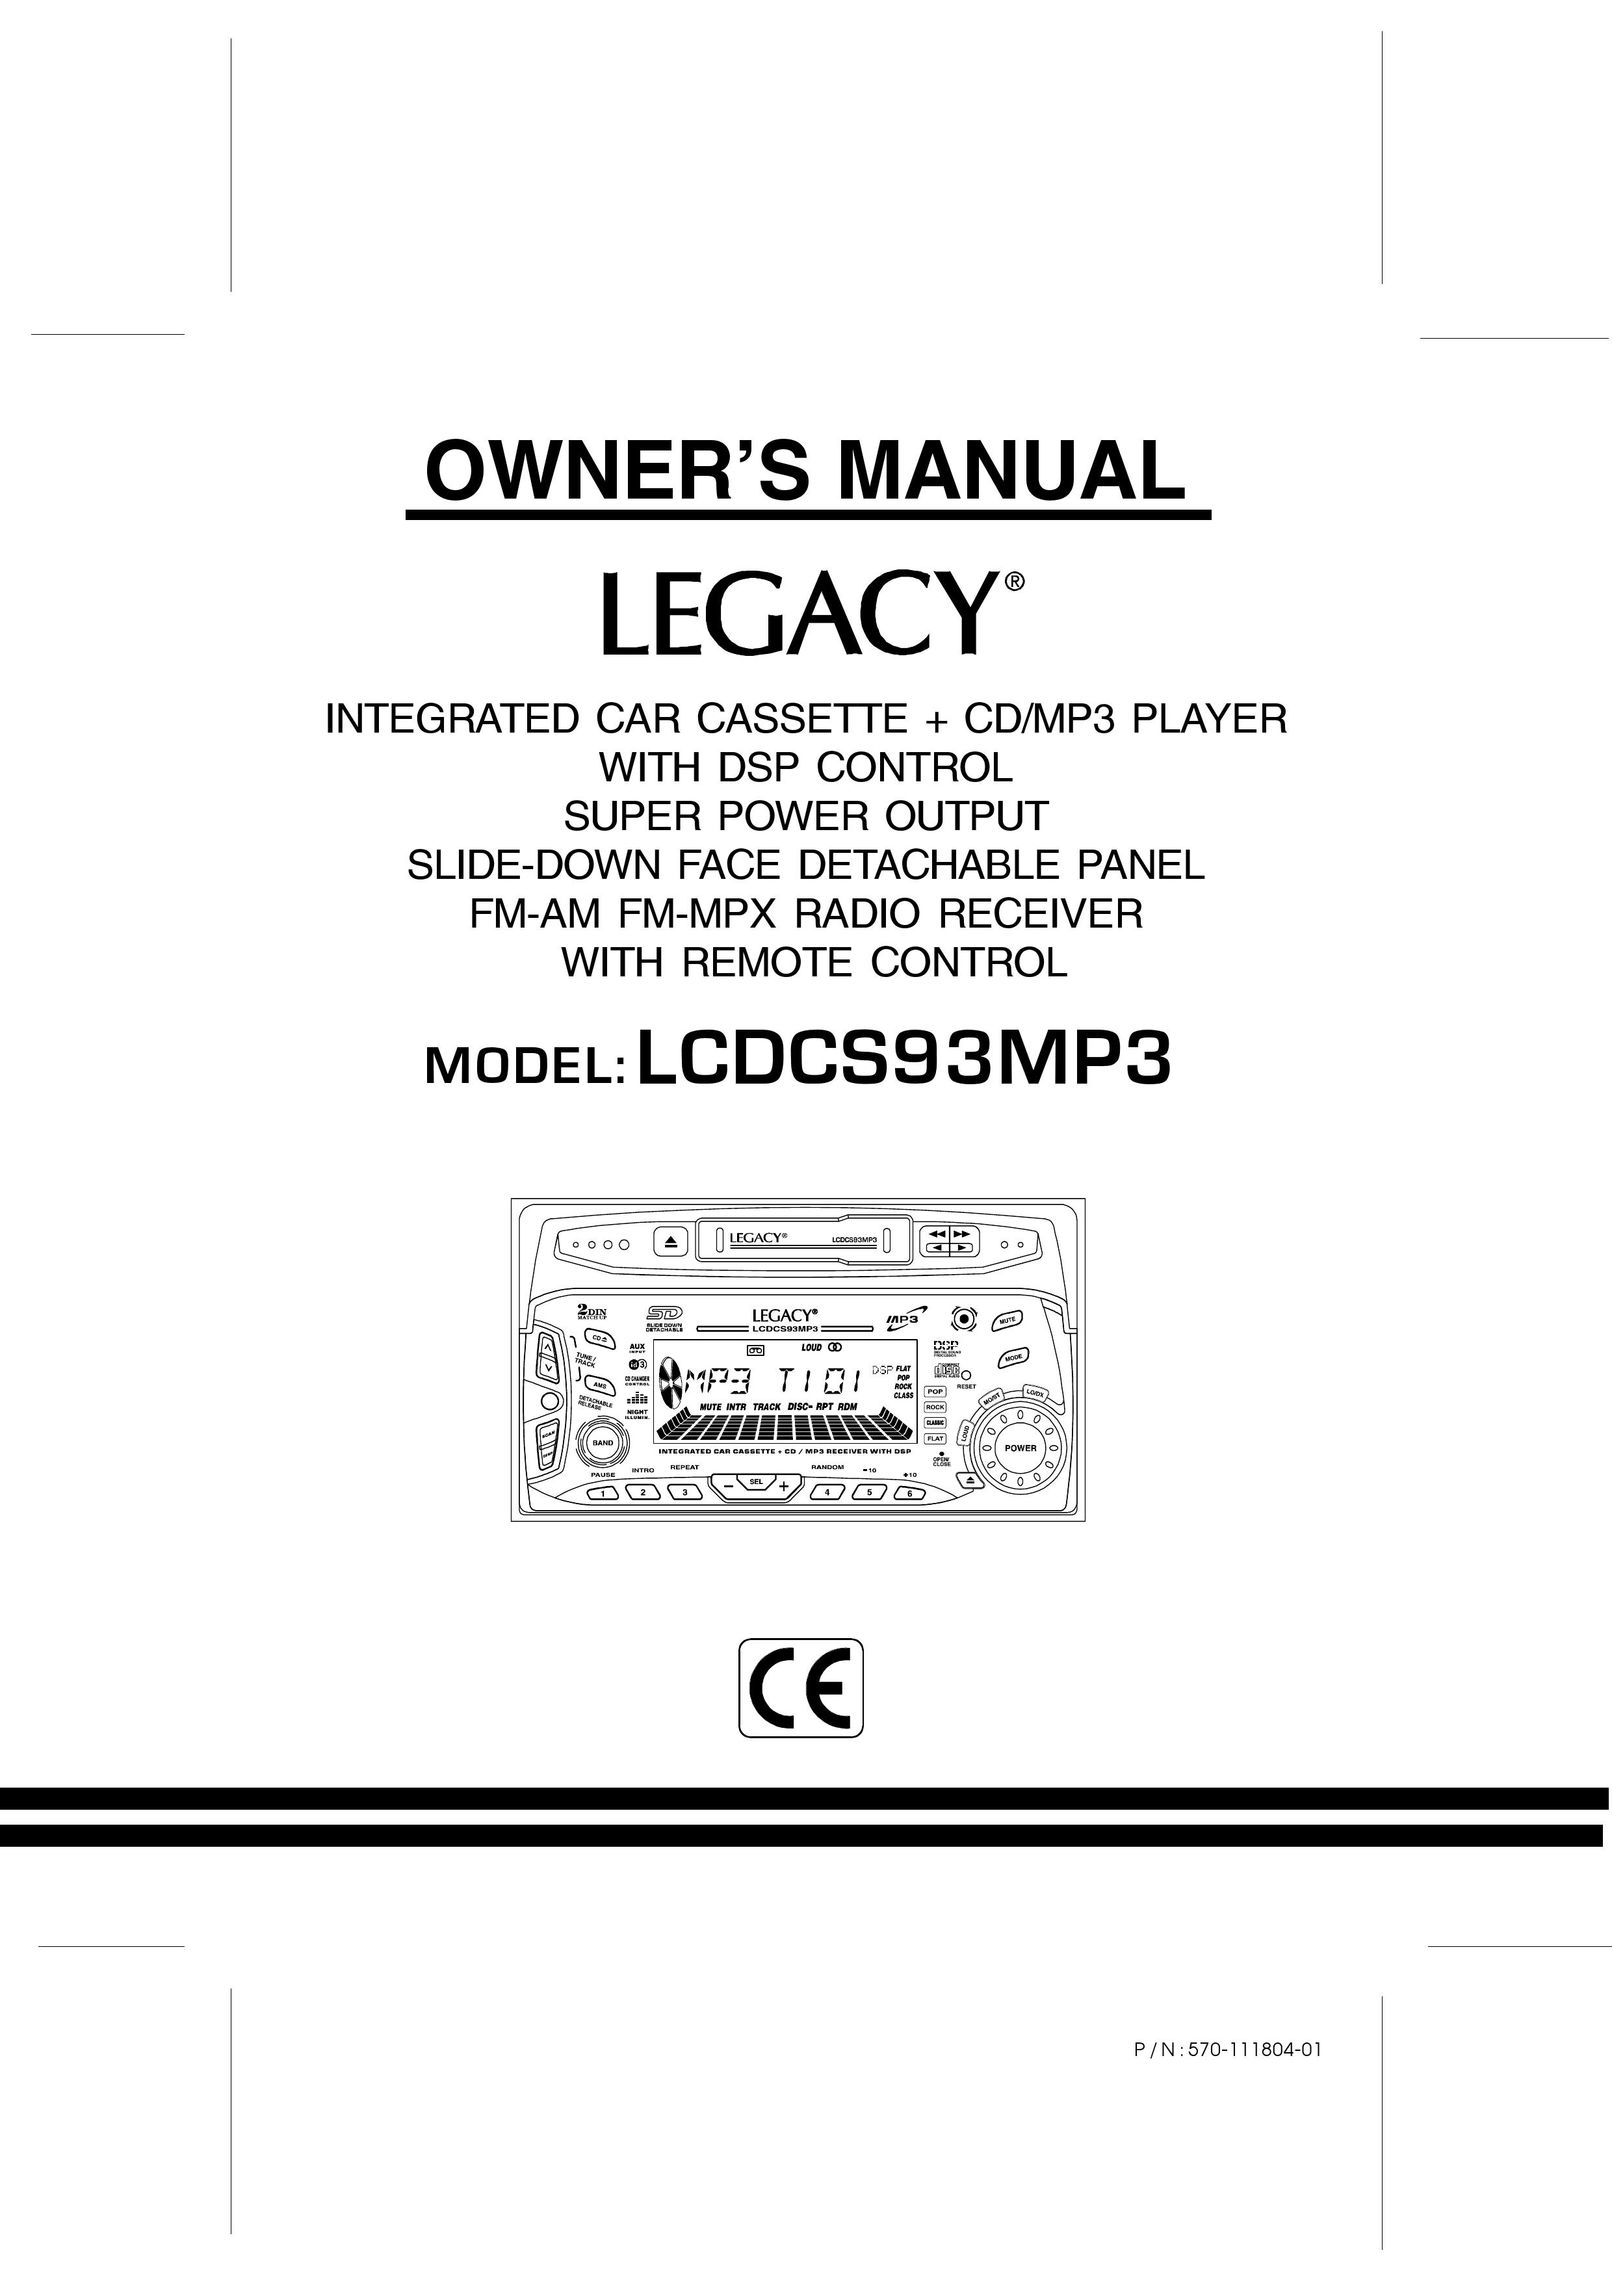 Legacy Car Audio LCDCS93MP3 Car Stereo System User Manual